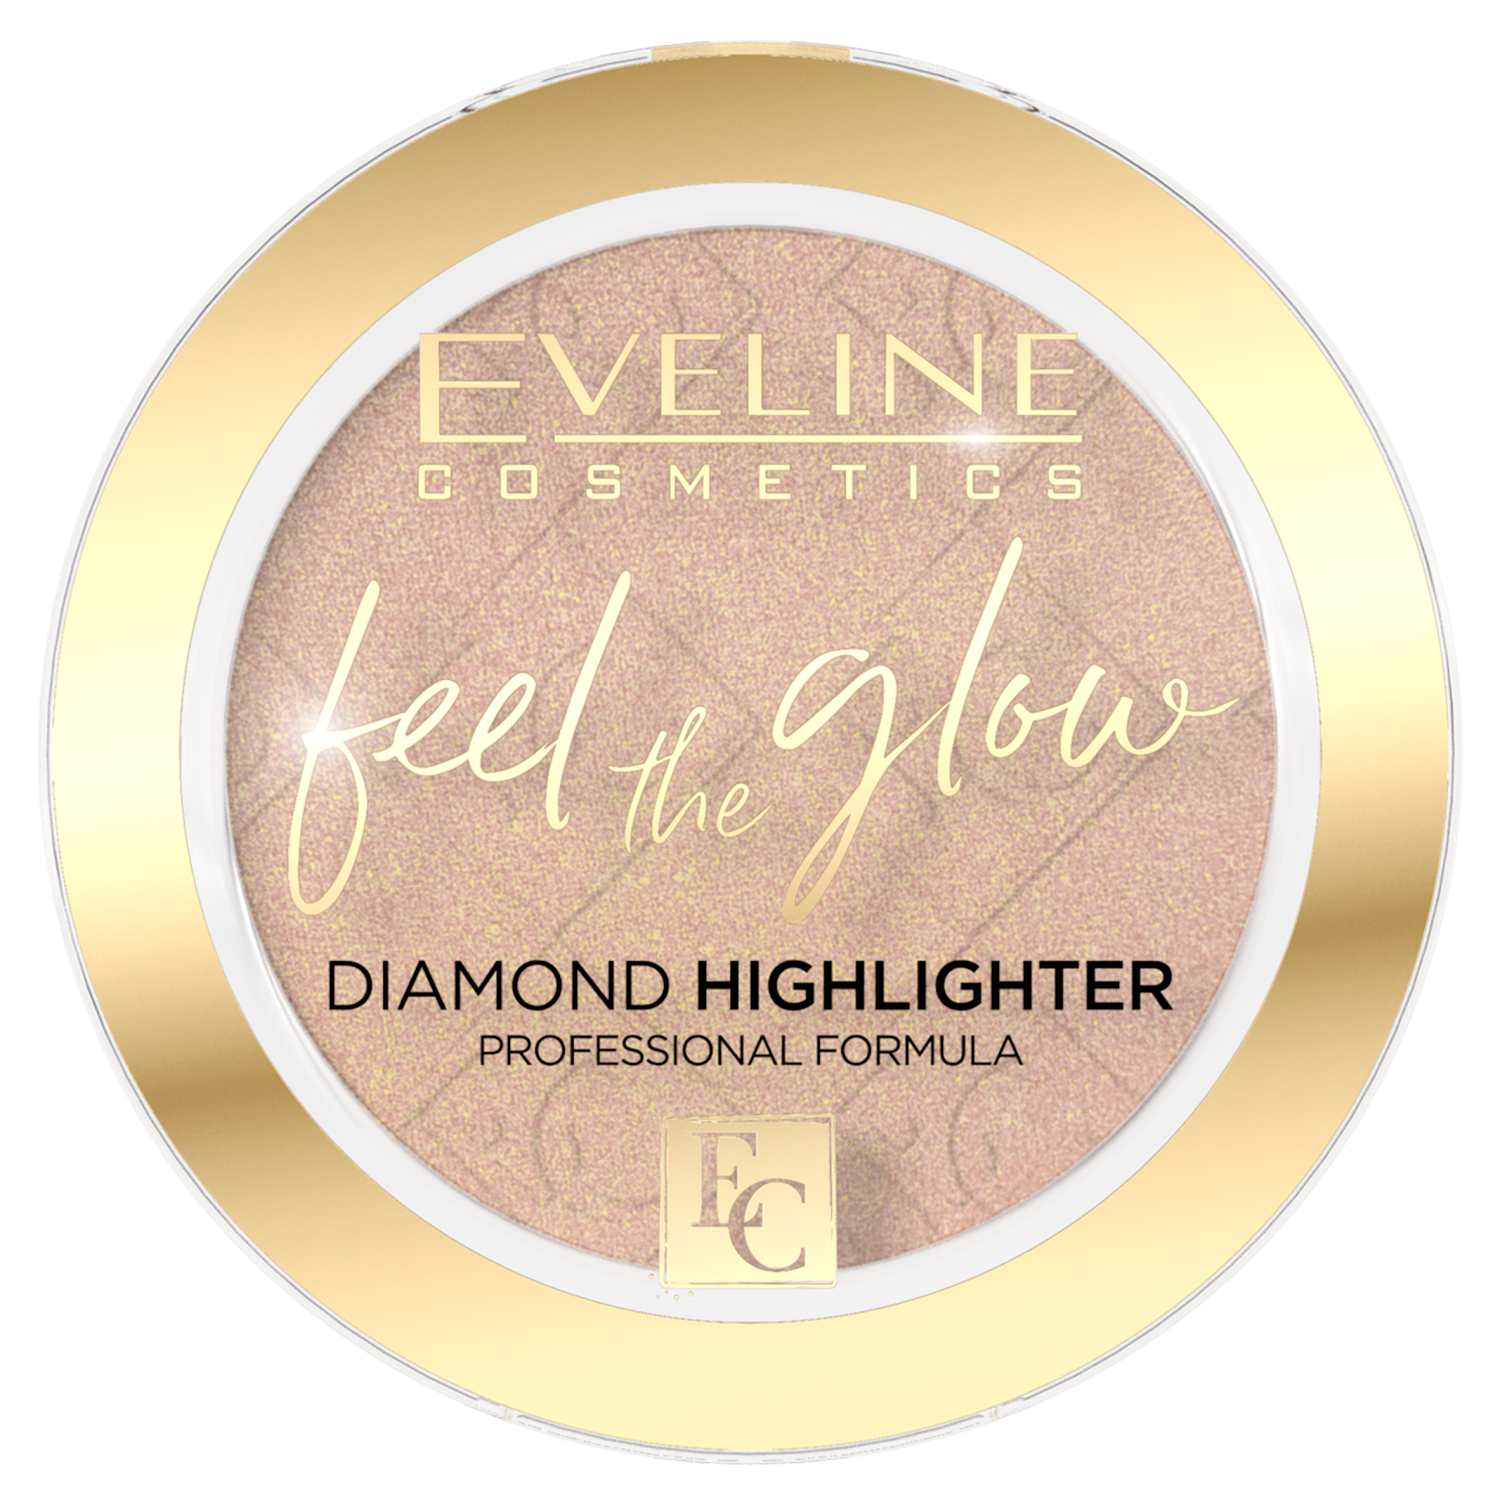 Хайлайтер для лица 02 Eveline Cosmetics Feel The Glow, 5 гр хайлайтер для лица eveline хайлайтер для лица feel the glow